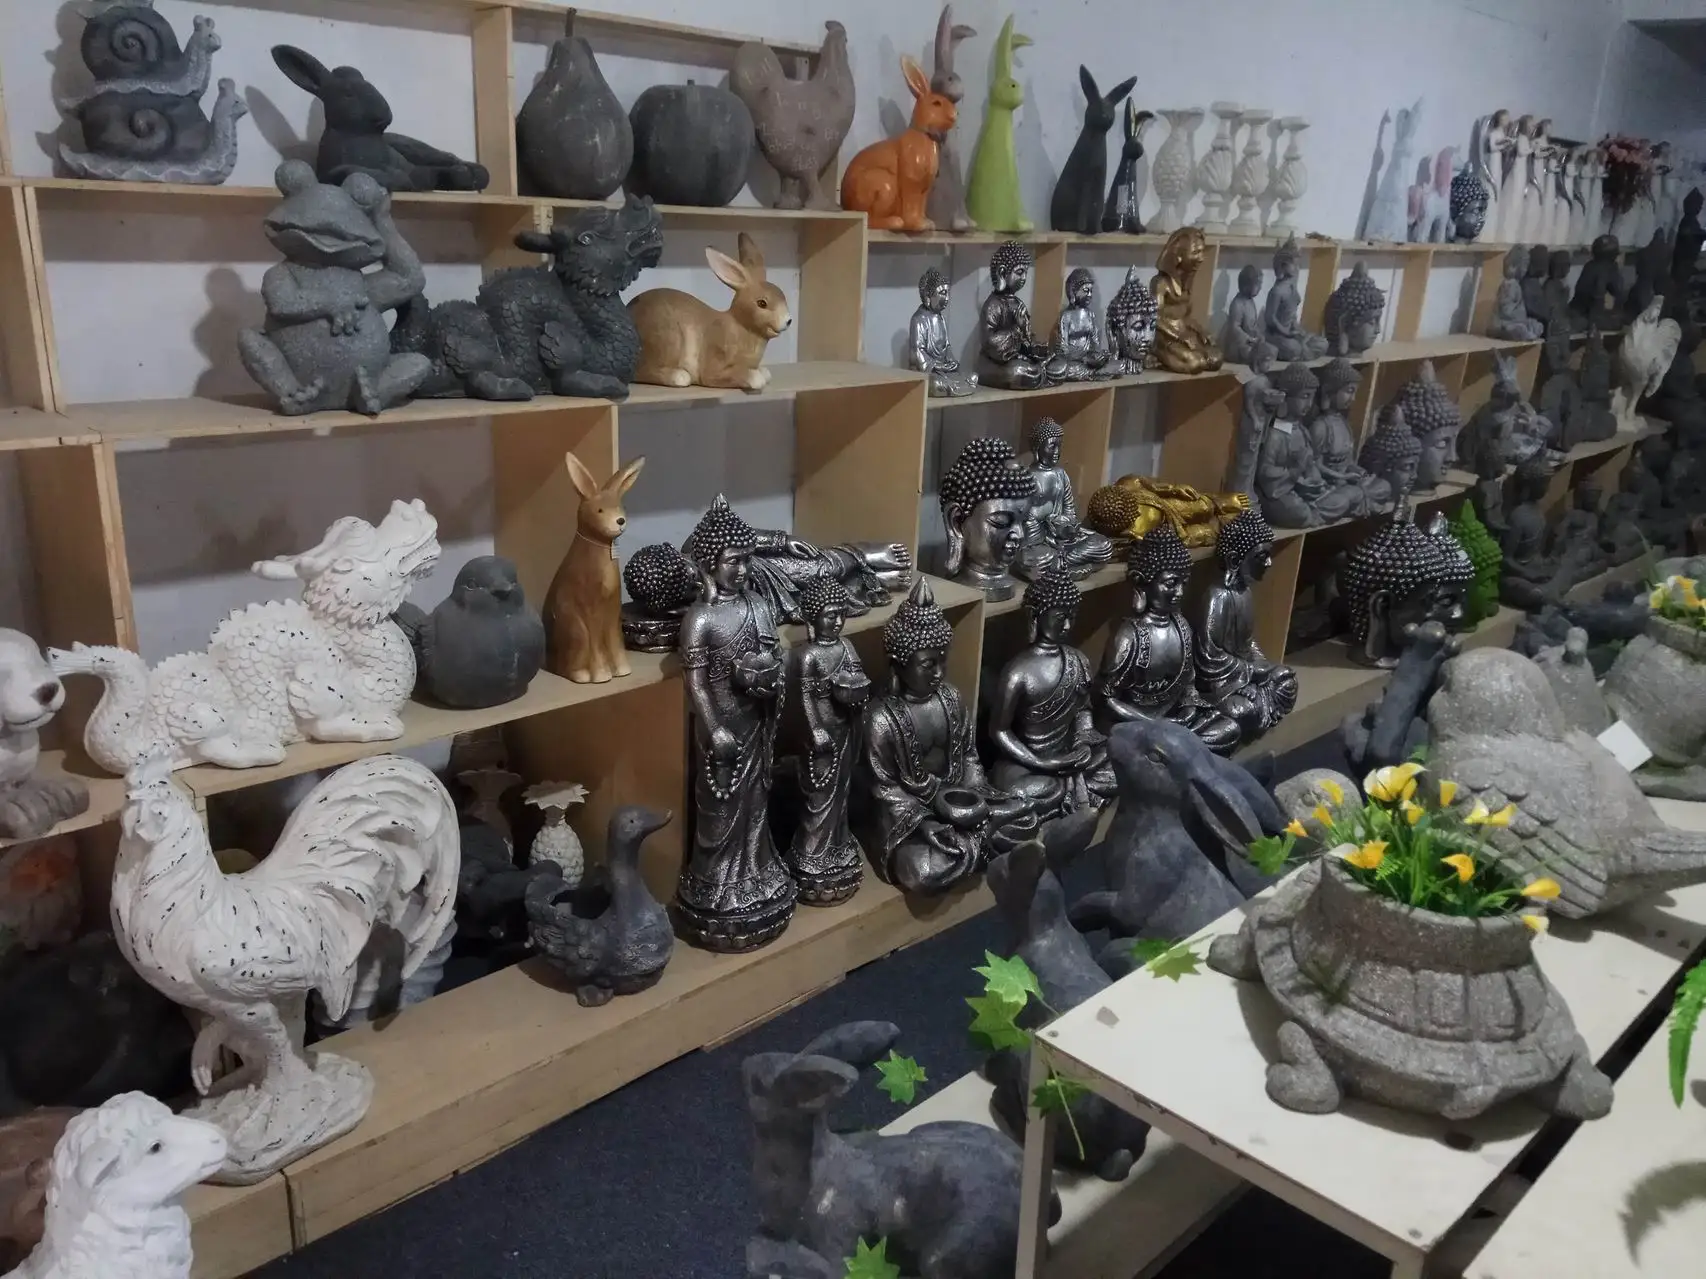 2022 Hot Amazon Christmas Decorations Ceramic Rabbit Sculpture Home Garden Decor Gold Animal Statues